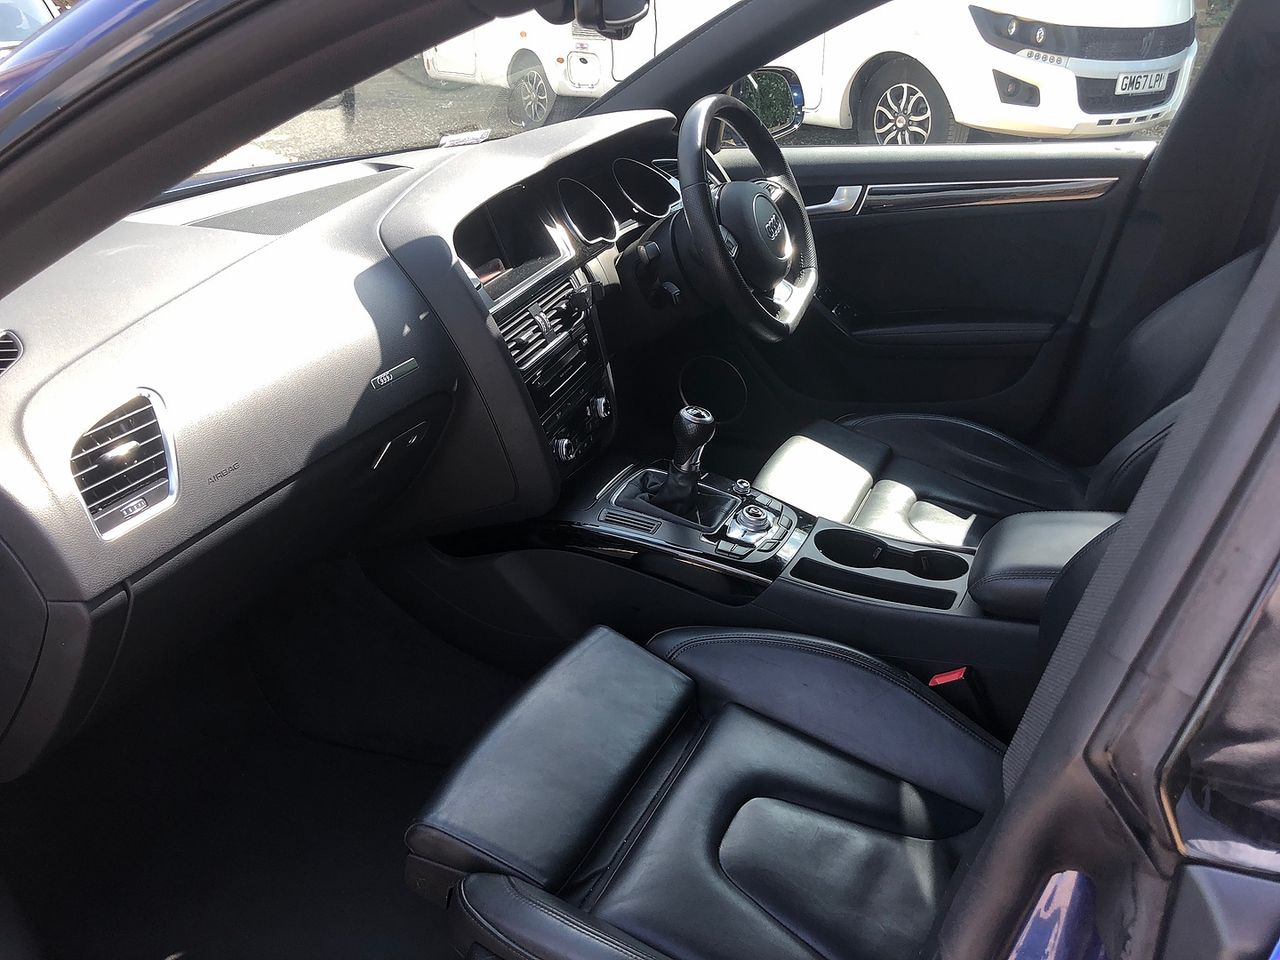 2015 AUDI A5 Sportback Black Edition Plus 1.8 TFSI 177PS - Picture 11 of 15